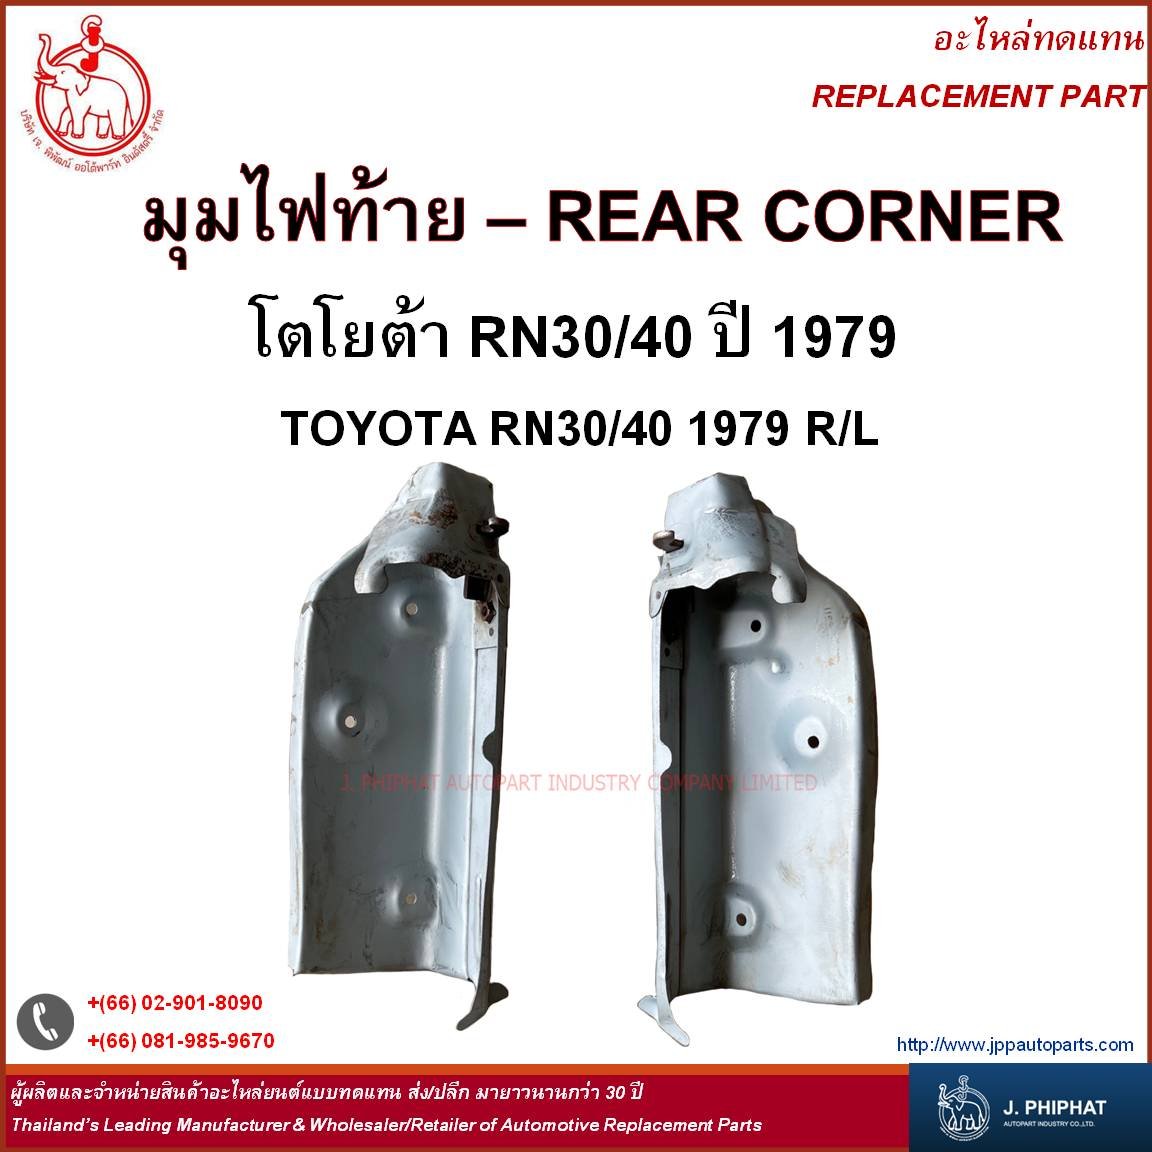 Rear Corner - TOYOTA RN30/40  '79 (R/L)